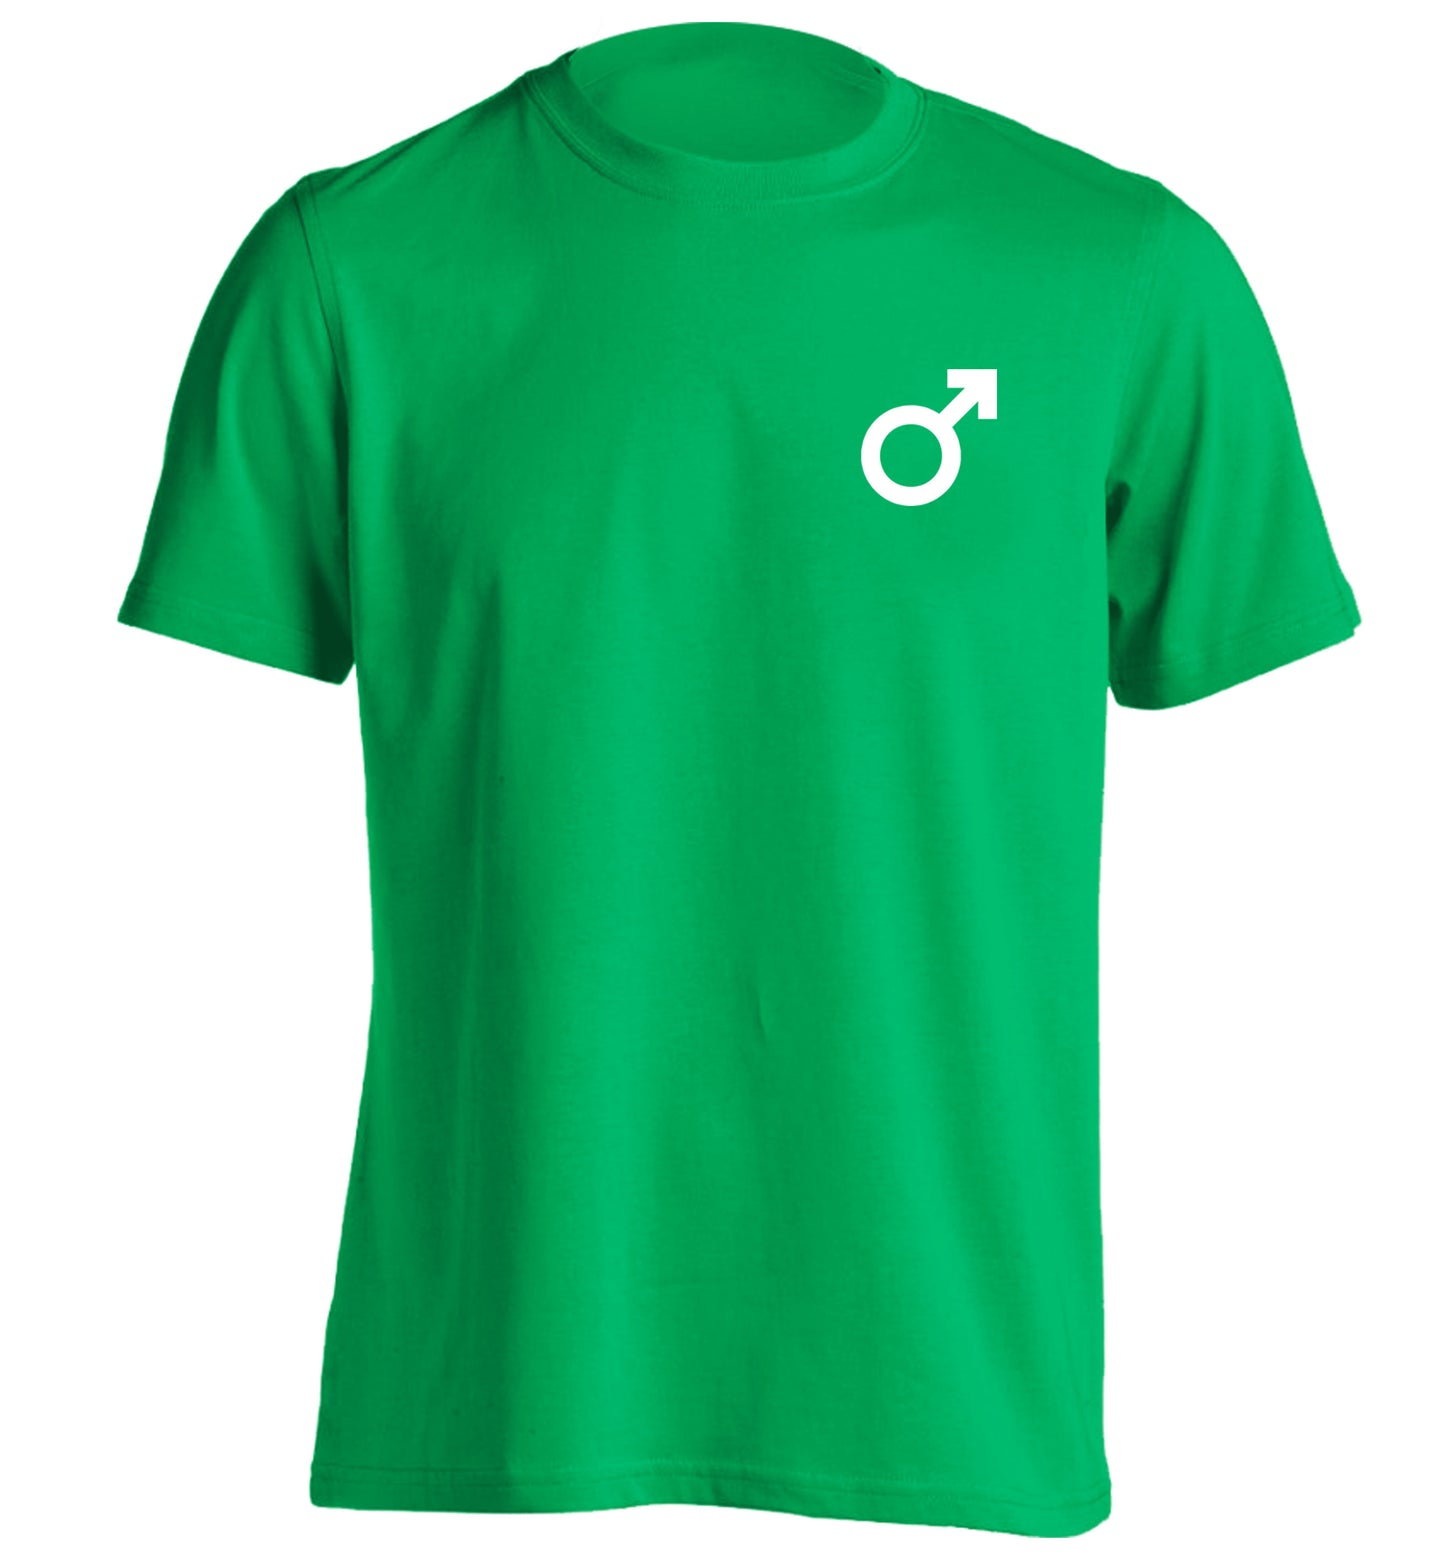 Male symbol pocket adults unisex green Tshirt 2XL